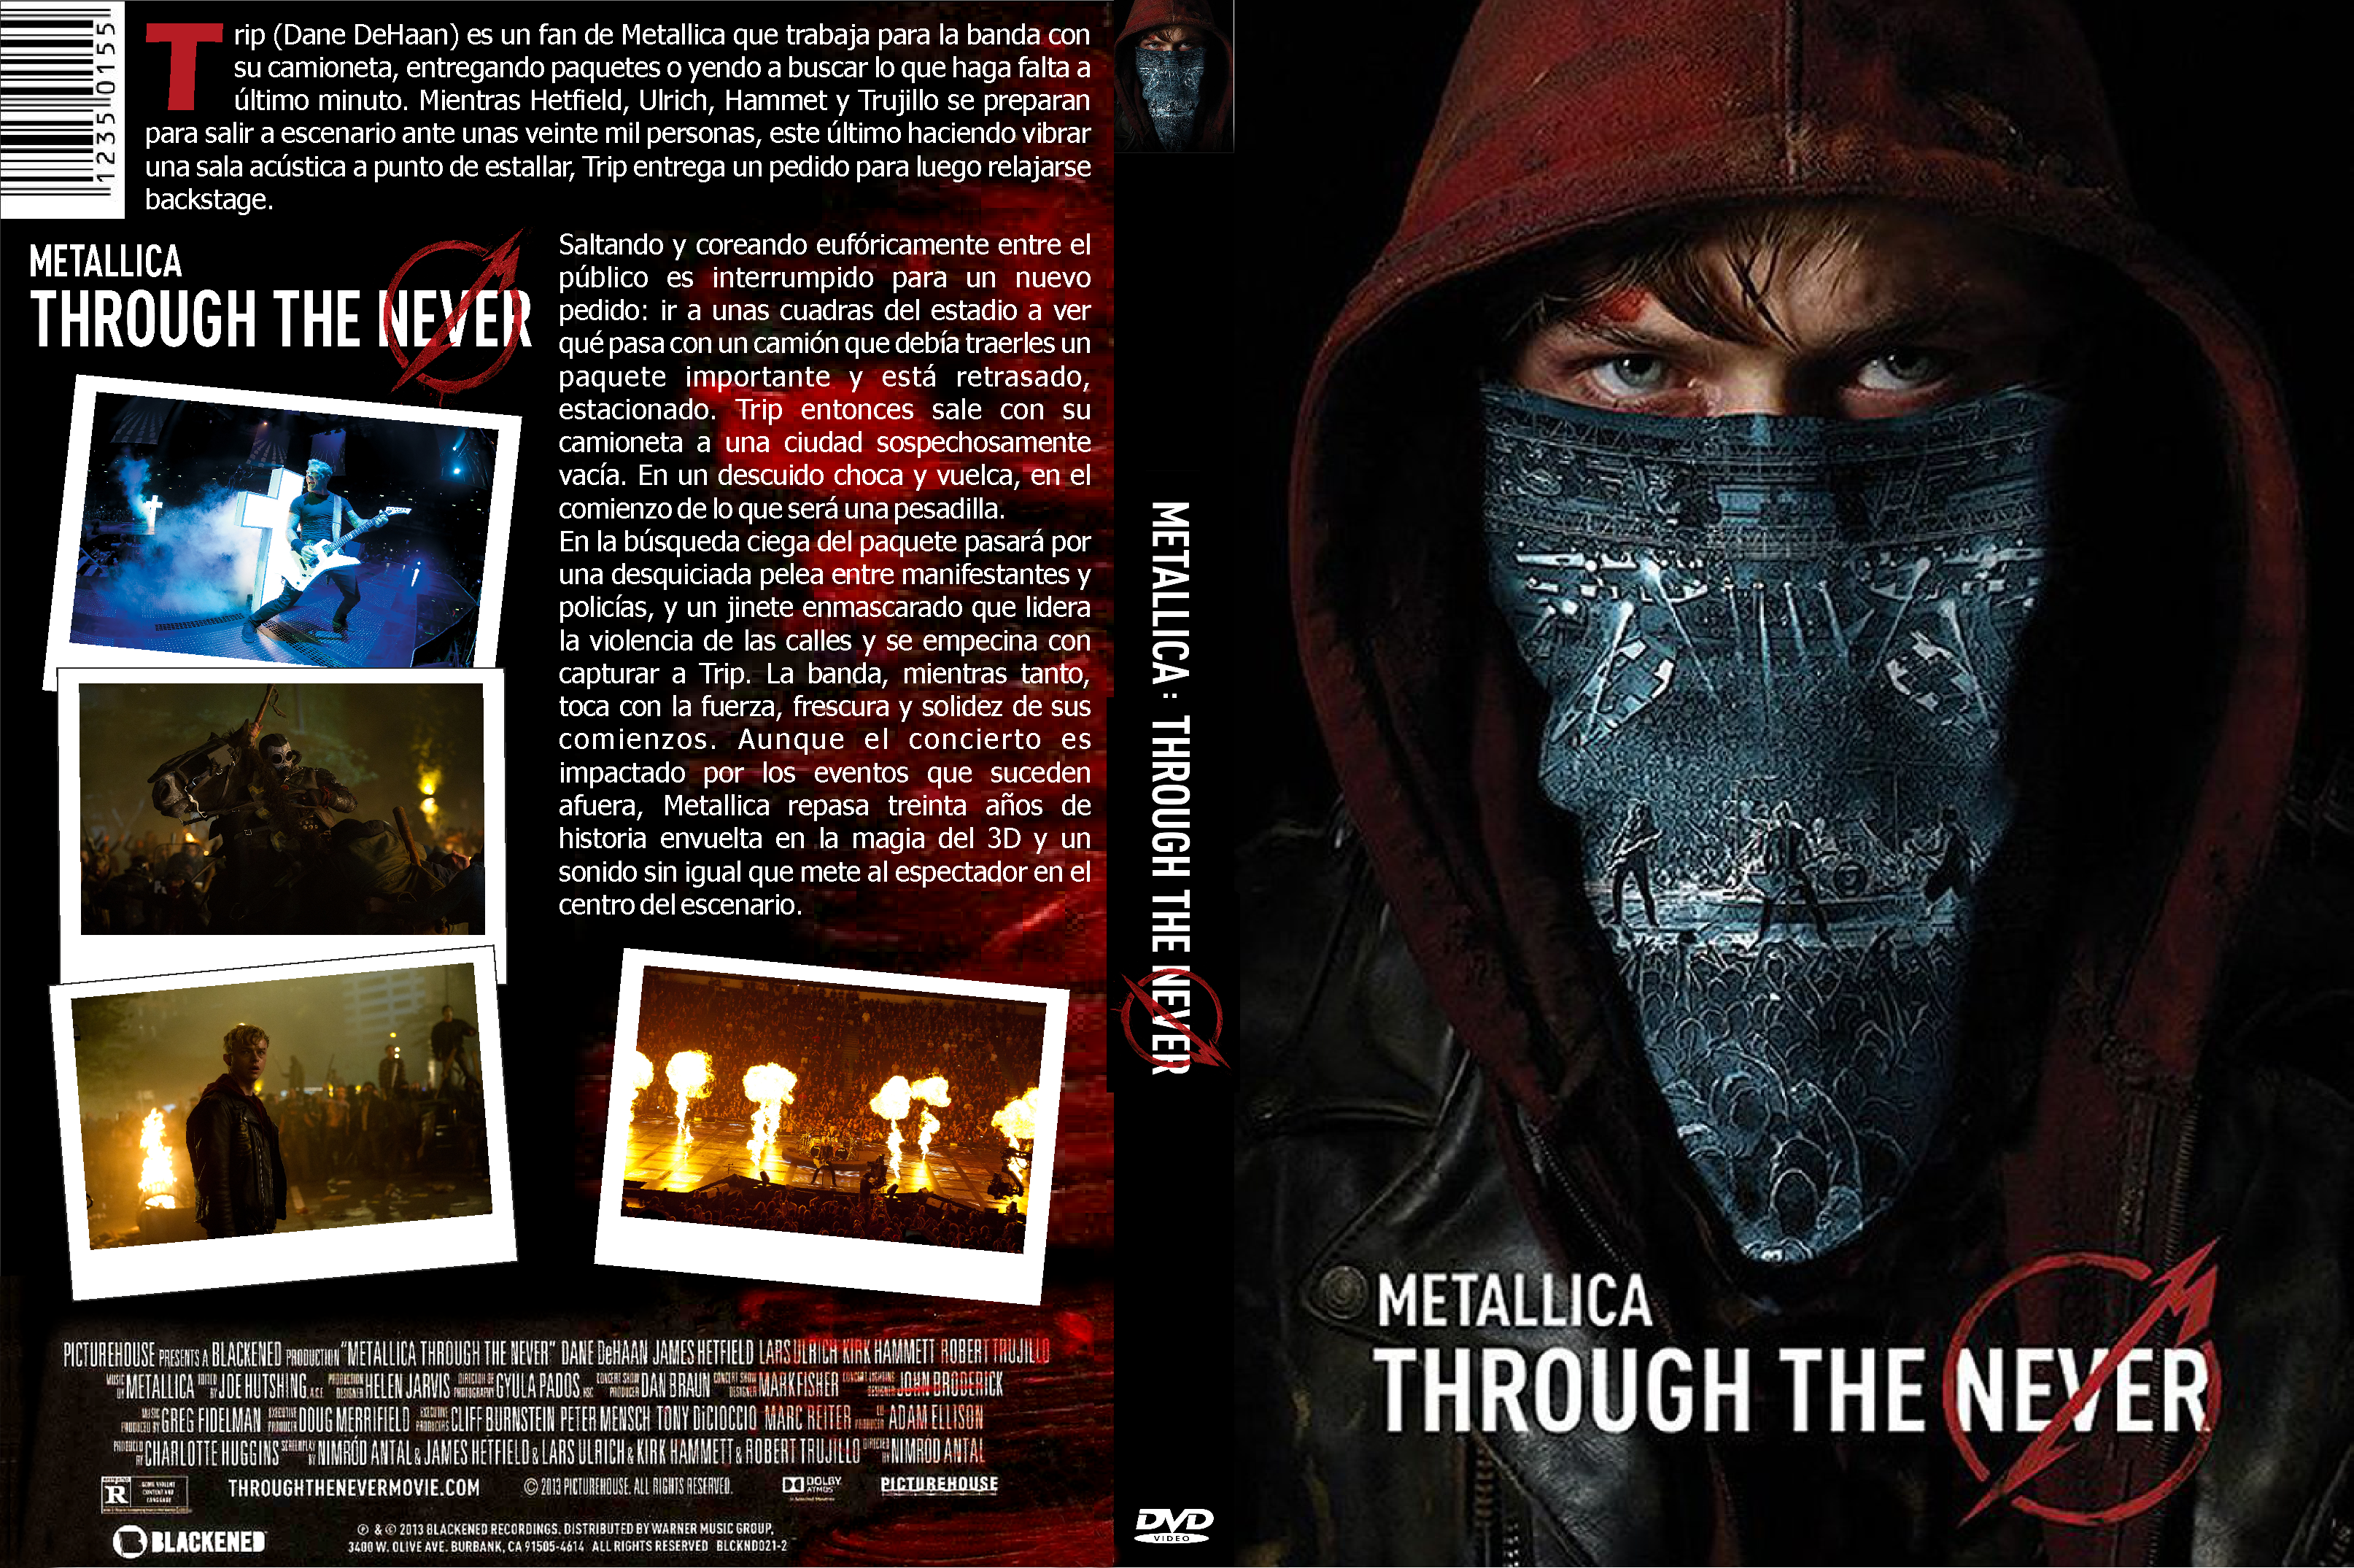 Metallica Through The Never box cover